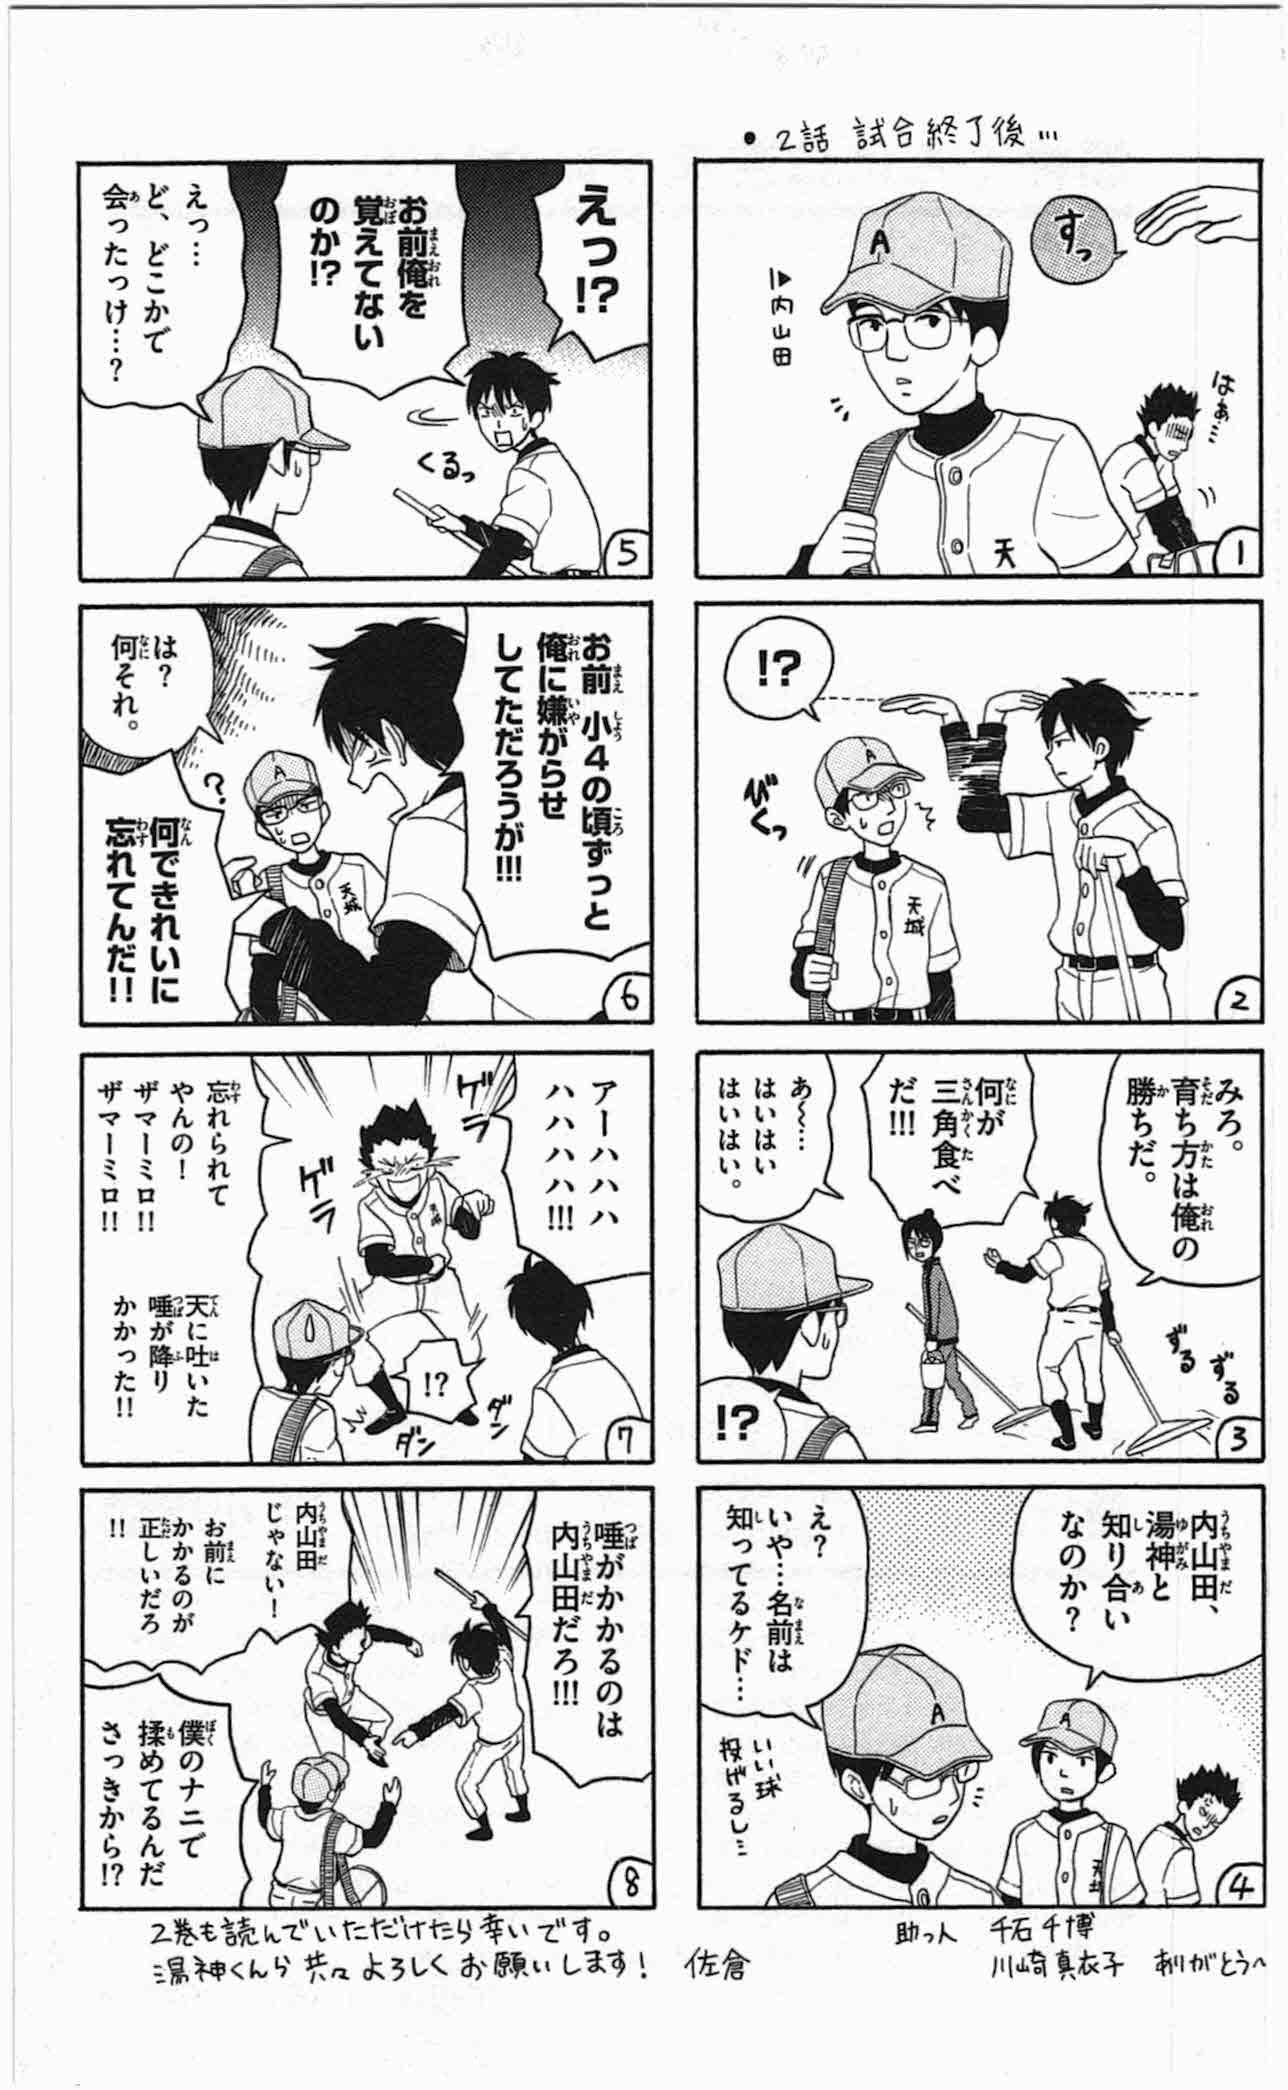 Yugami-kun ni wa Tomodachi ga Inai - Chapter 005 - Page 33